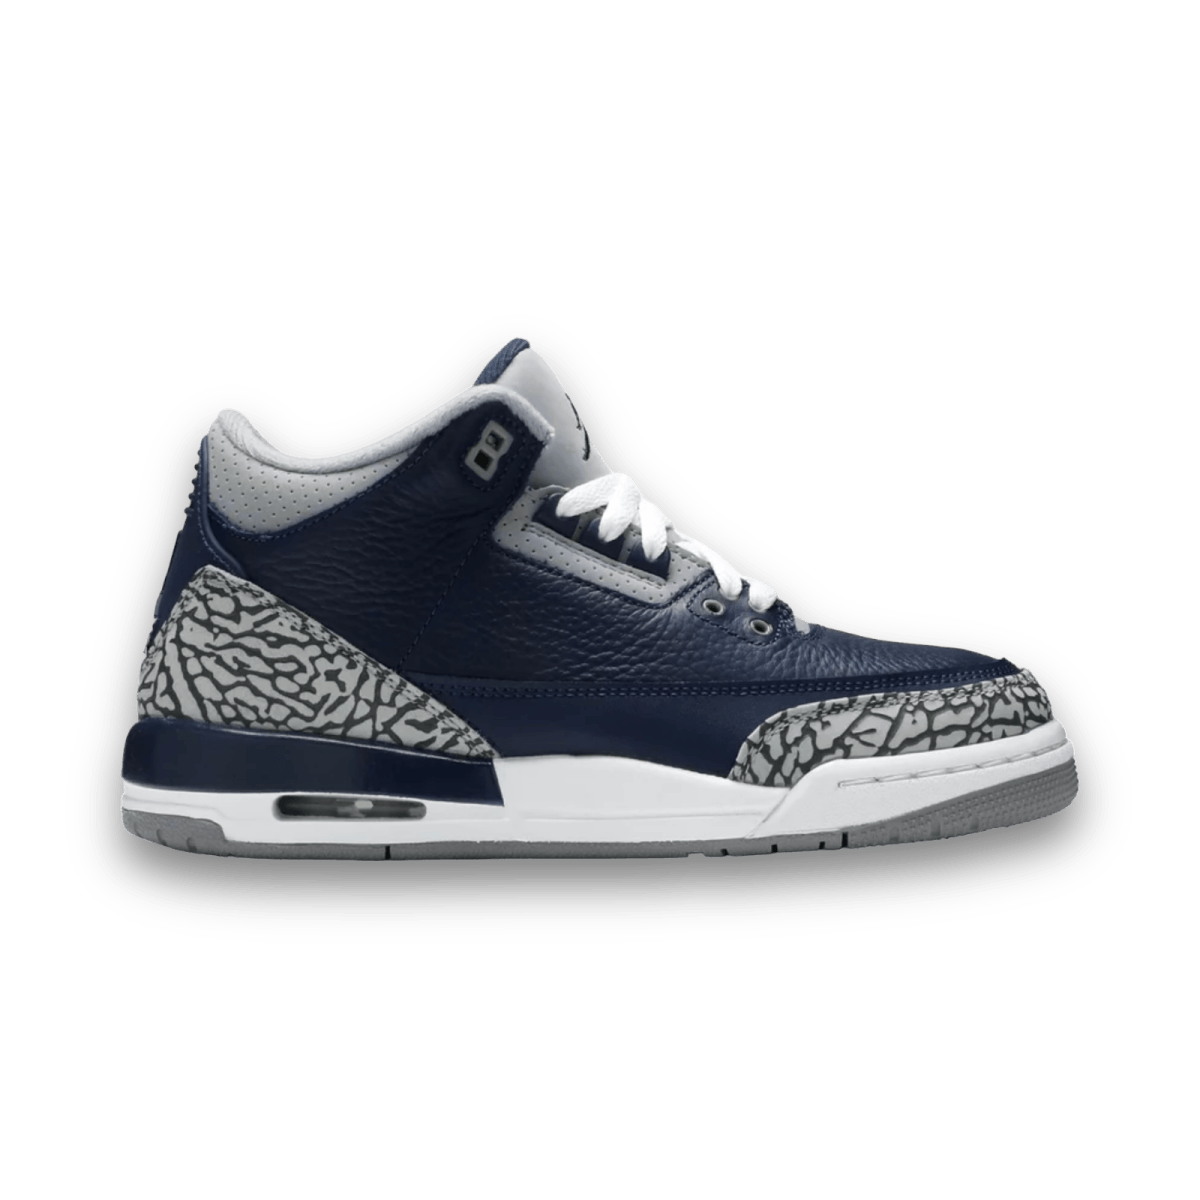 Air Jordan 3 Retro Navy & Silver - Grade School - Mid Sneaker - Jordan - Jawns on Fire - sneakers